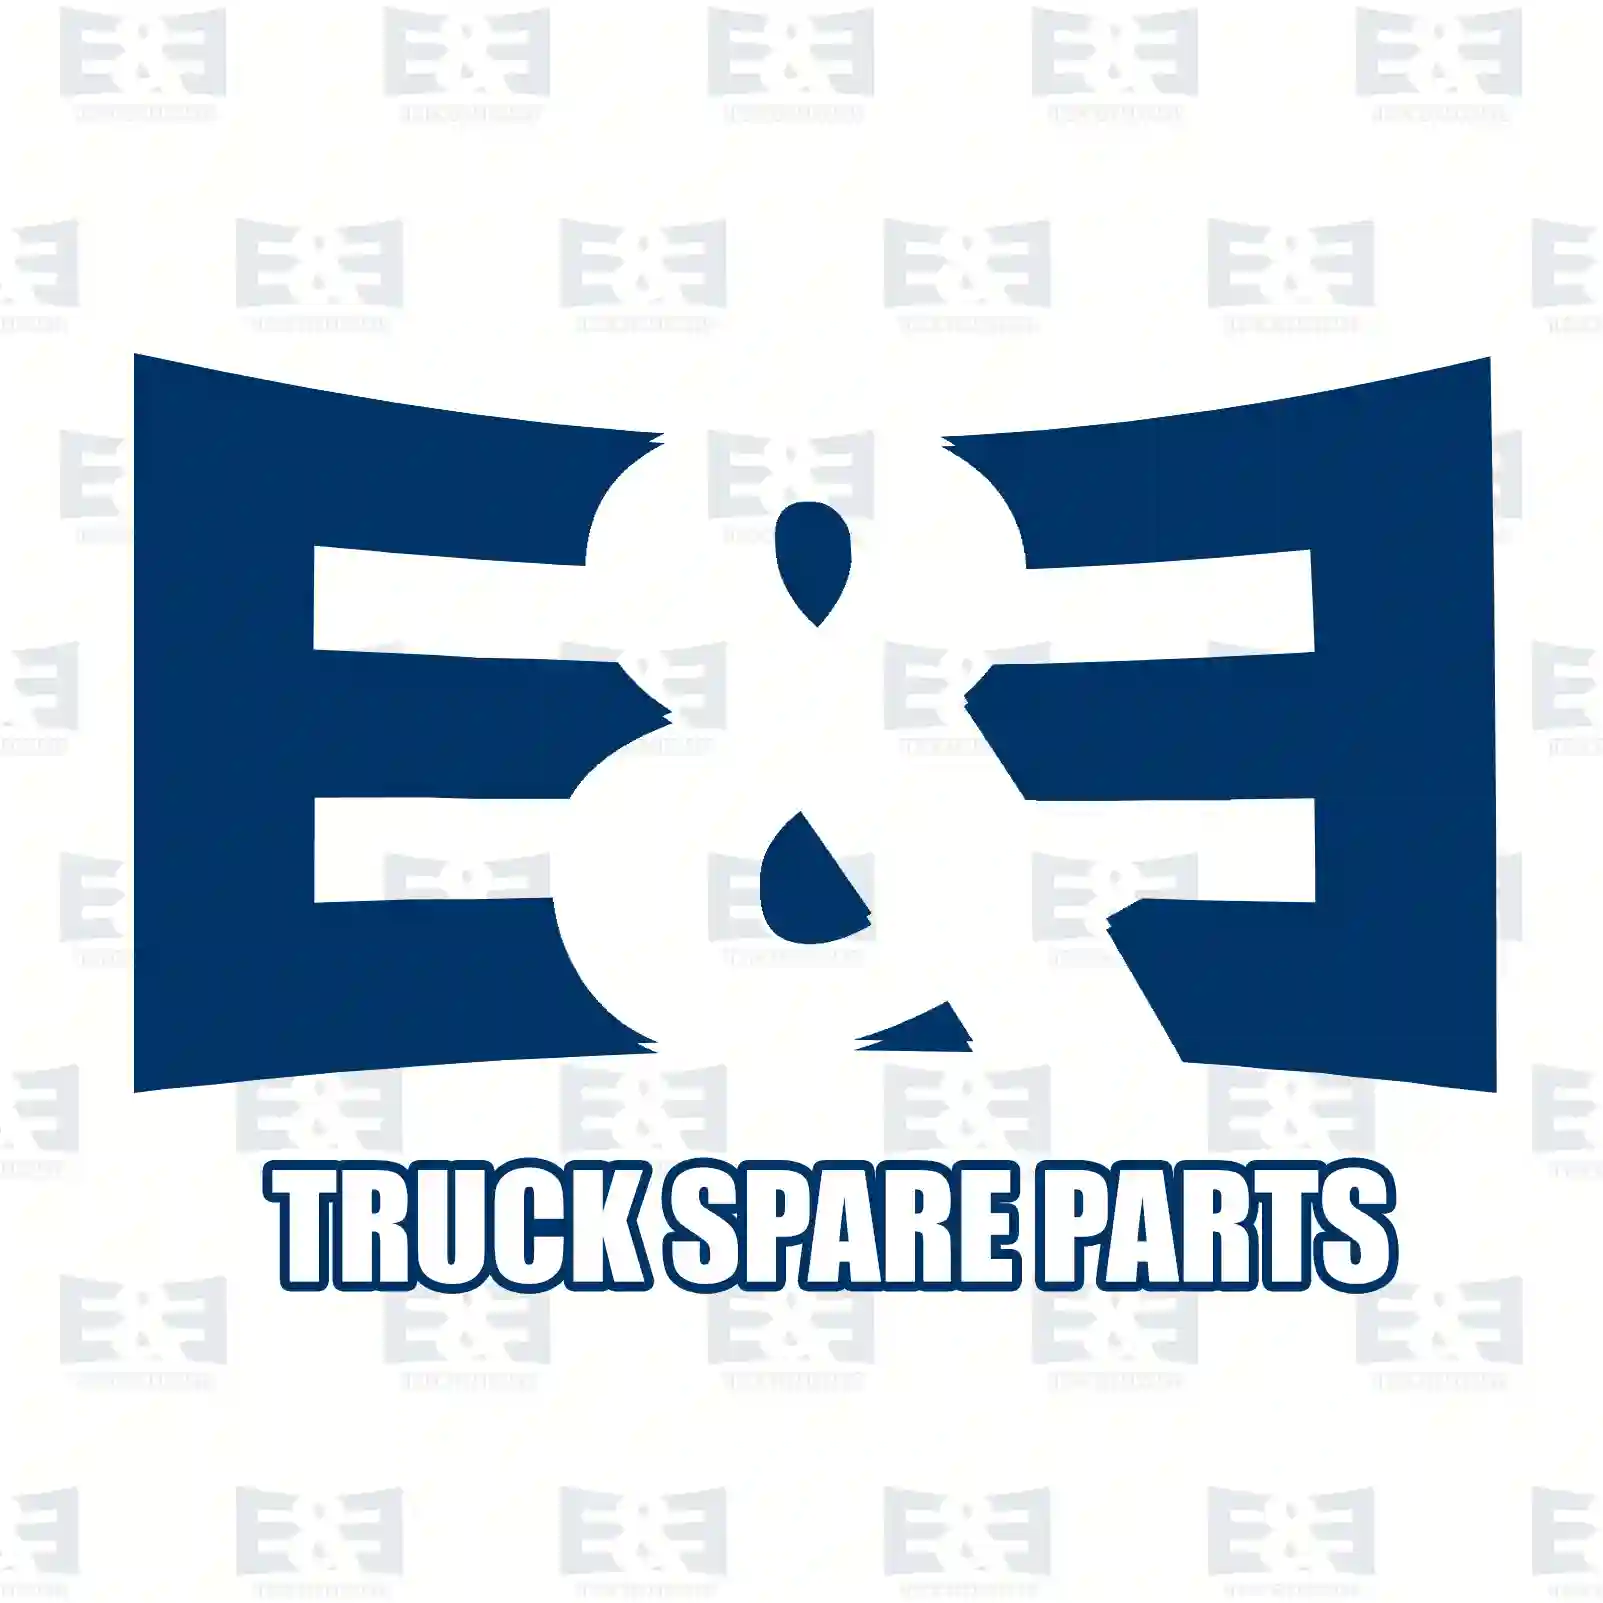 Propeller Shaft End yoke, EE No 2E2276655 ,  oem no:1113886, 1340753 E&E Truck Spare Parts | Truck Spare Parts, Auotomotive Spare Parts